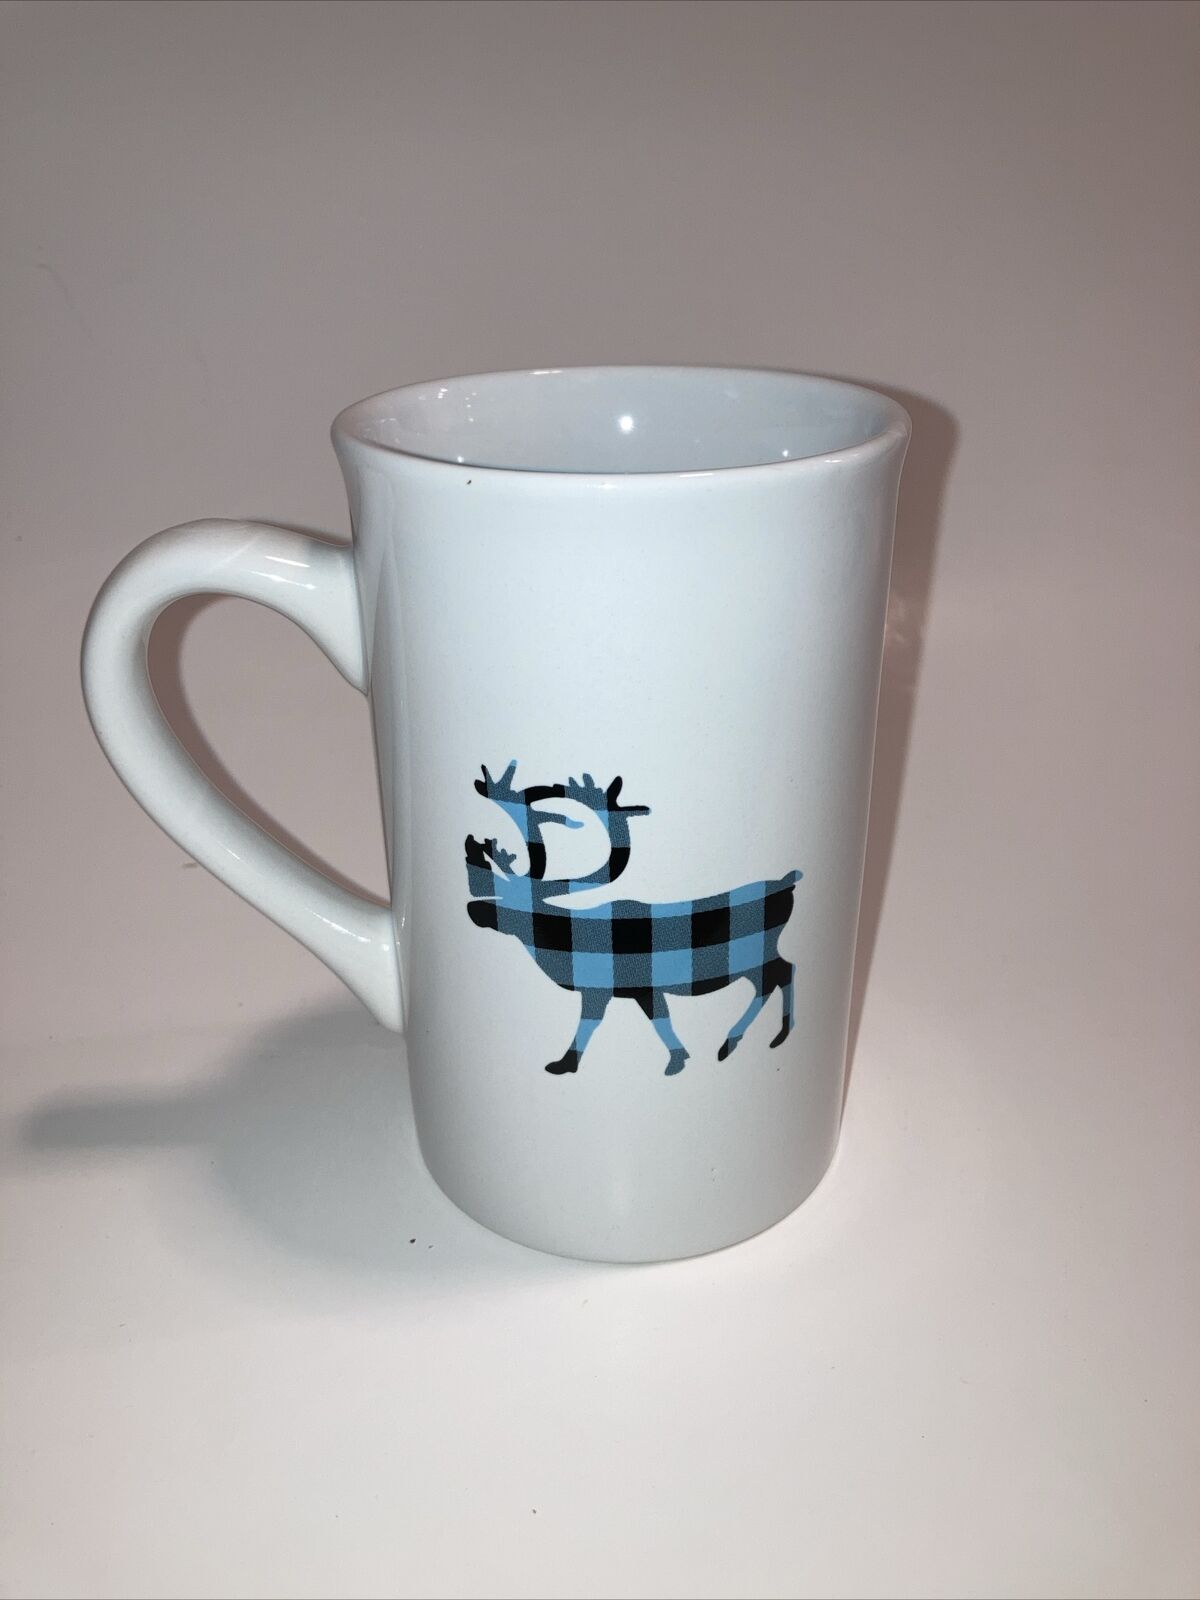 2020 Caribou Coffee Reindeer 14 oz. Coffee Mug Cup White Blue Black